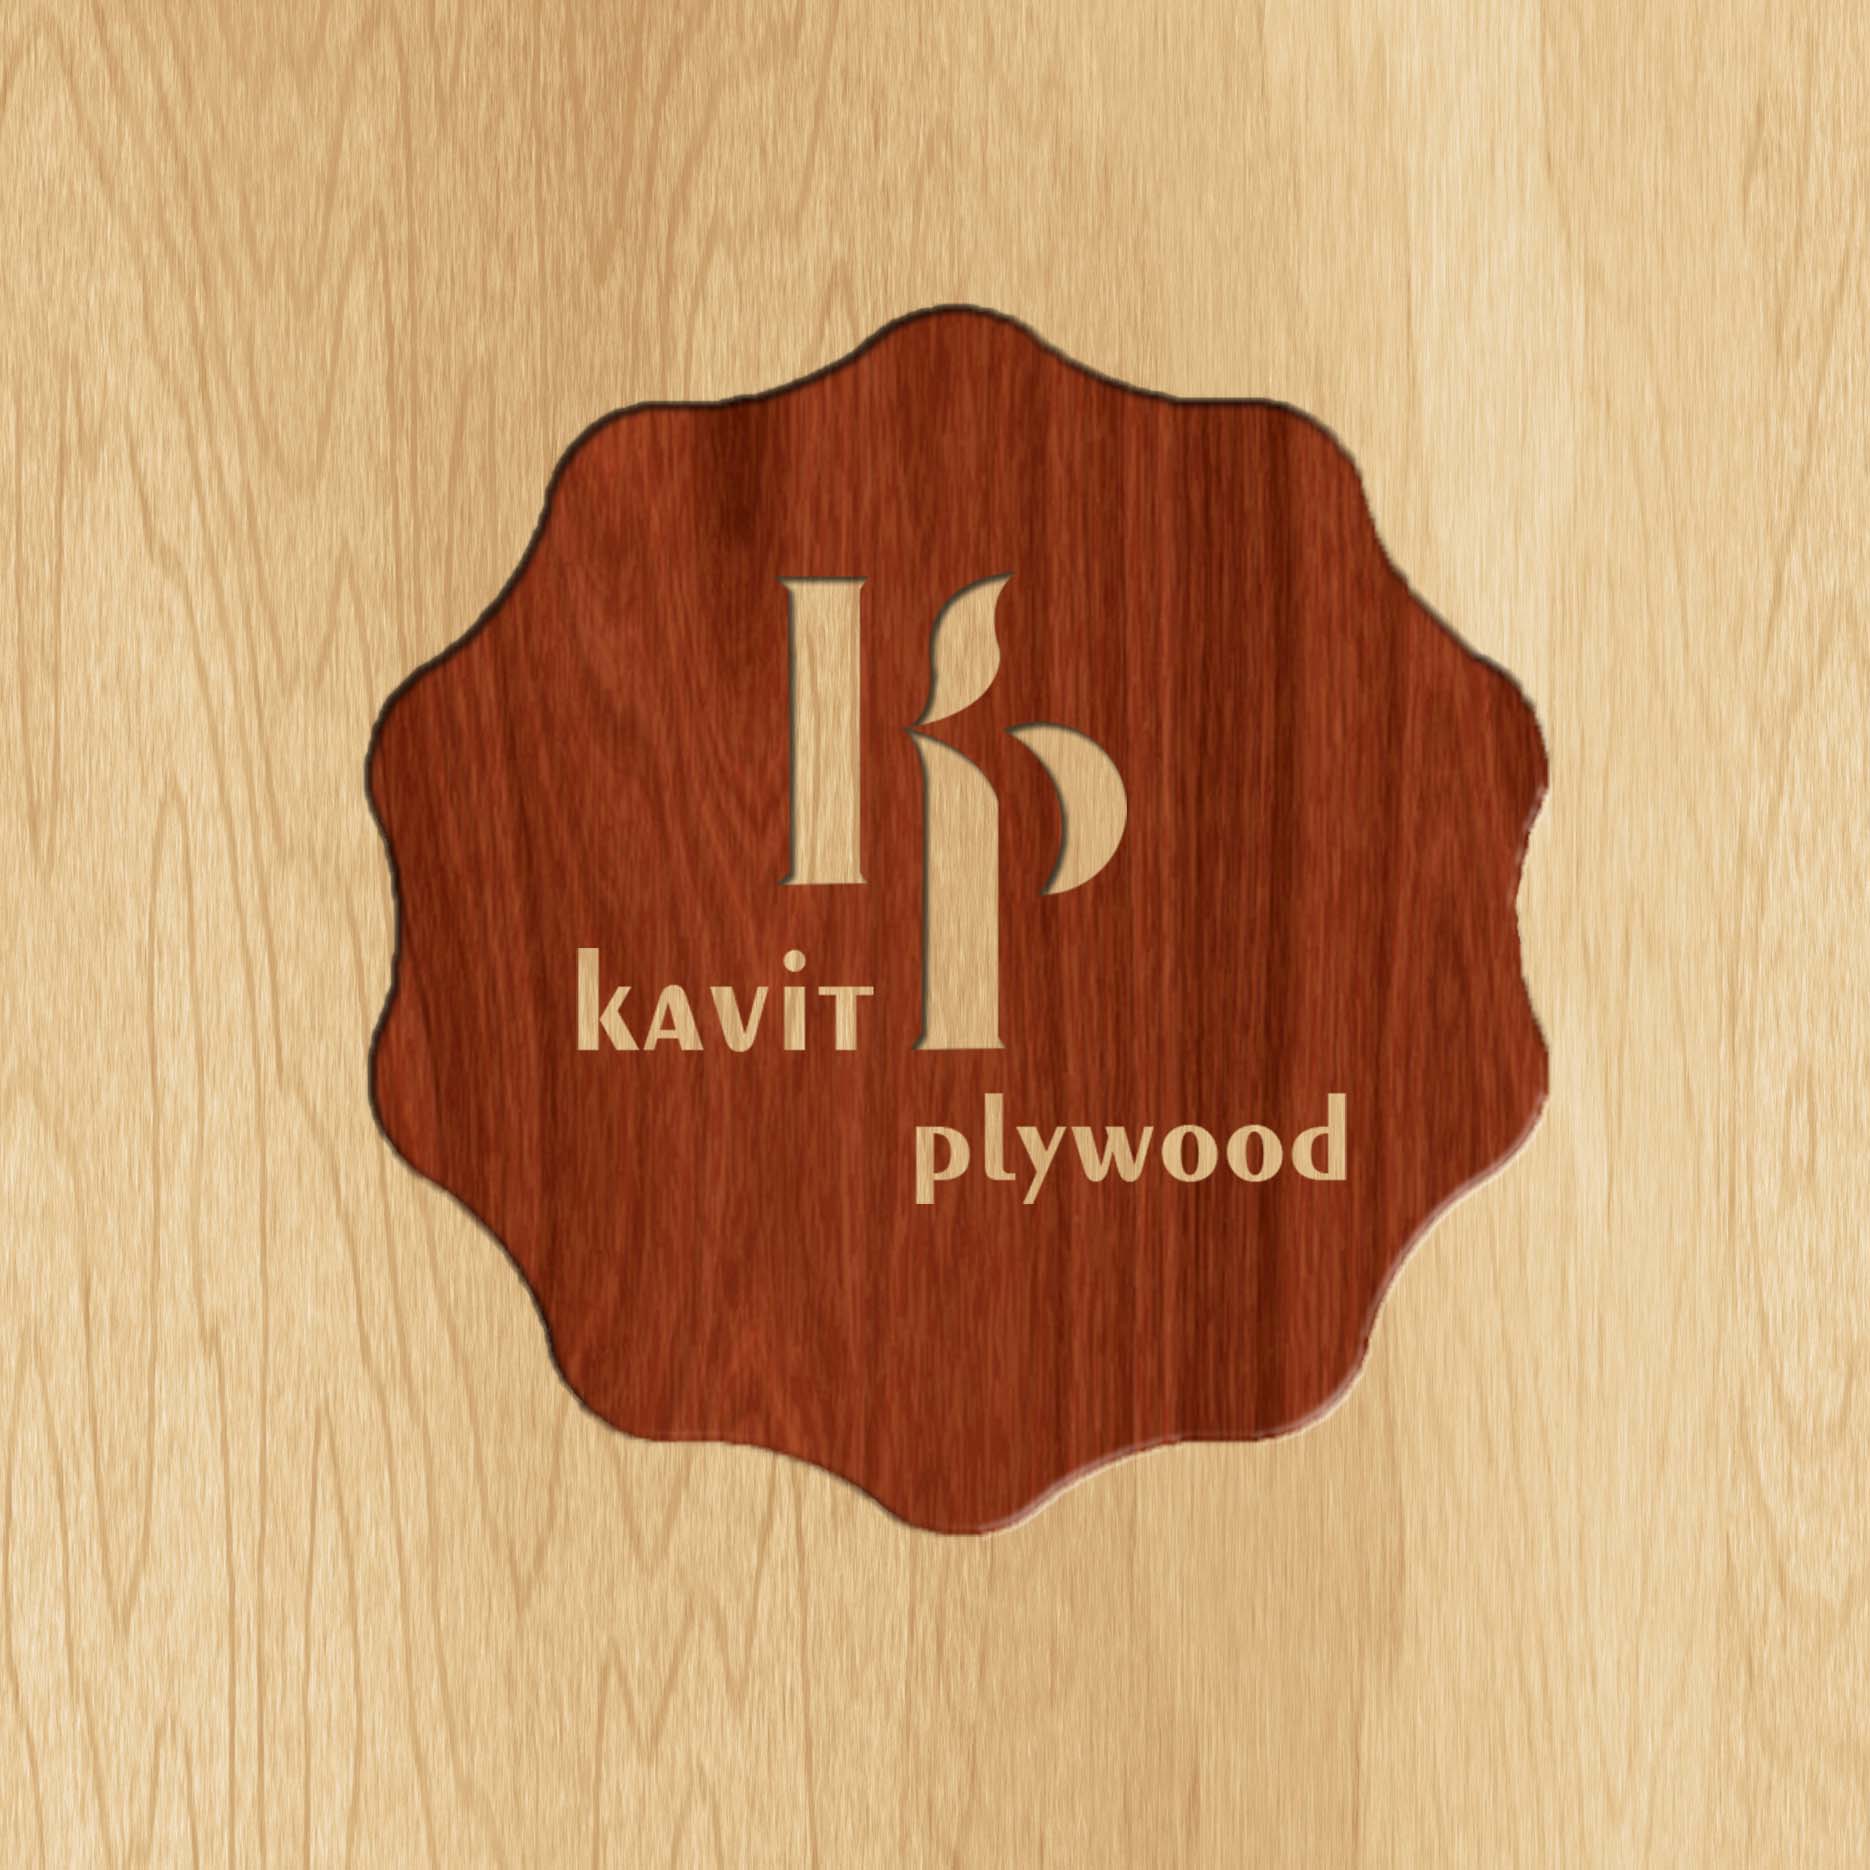 Kavit plywood